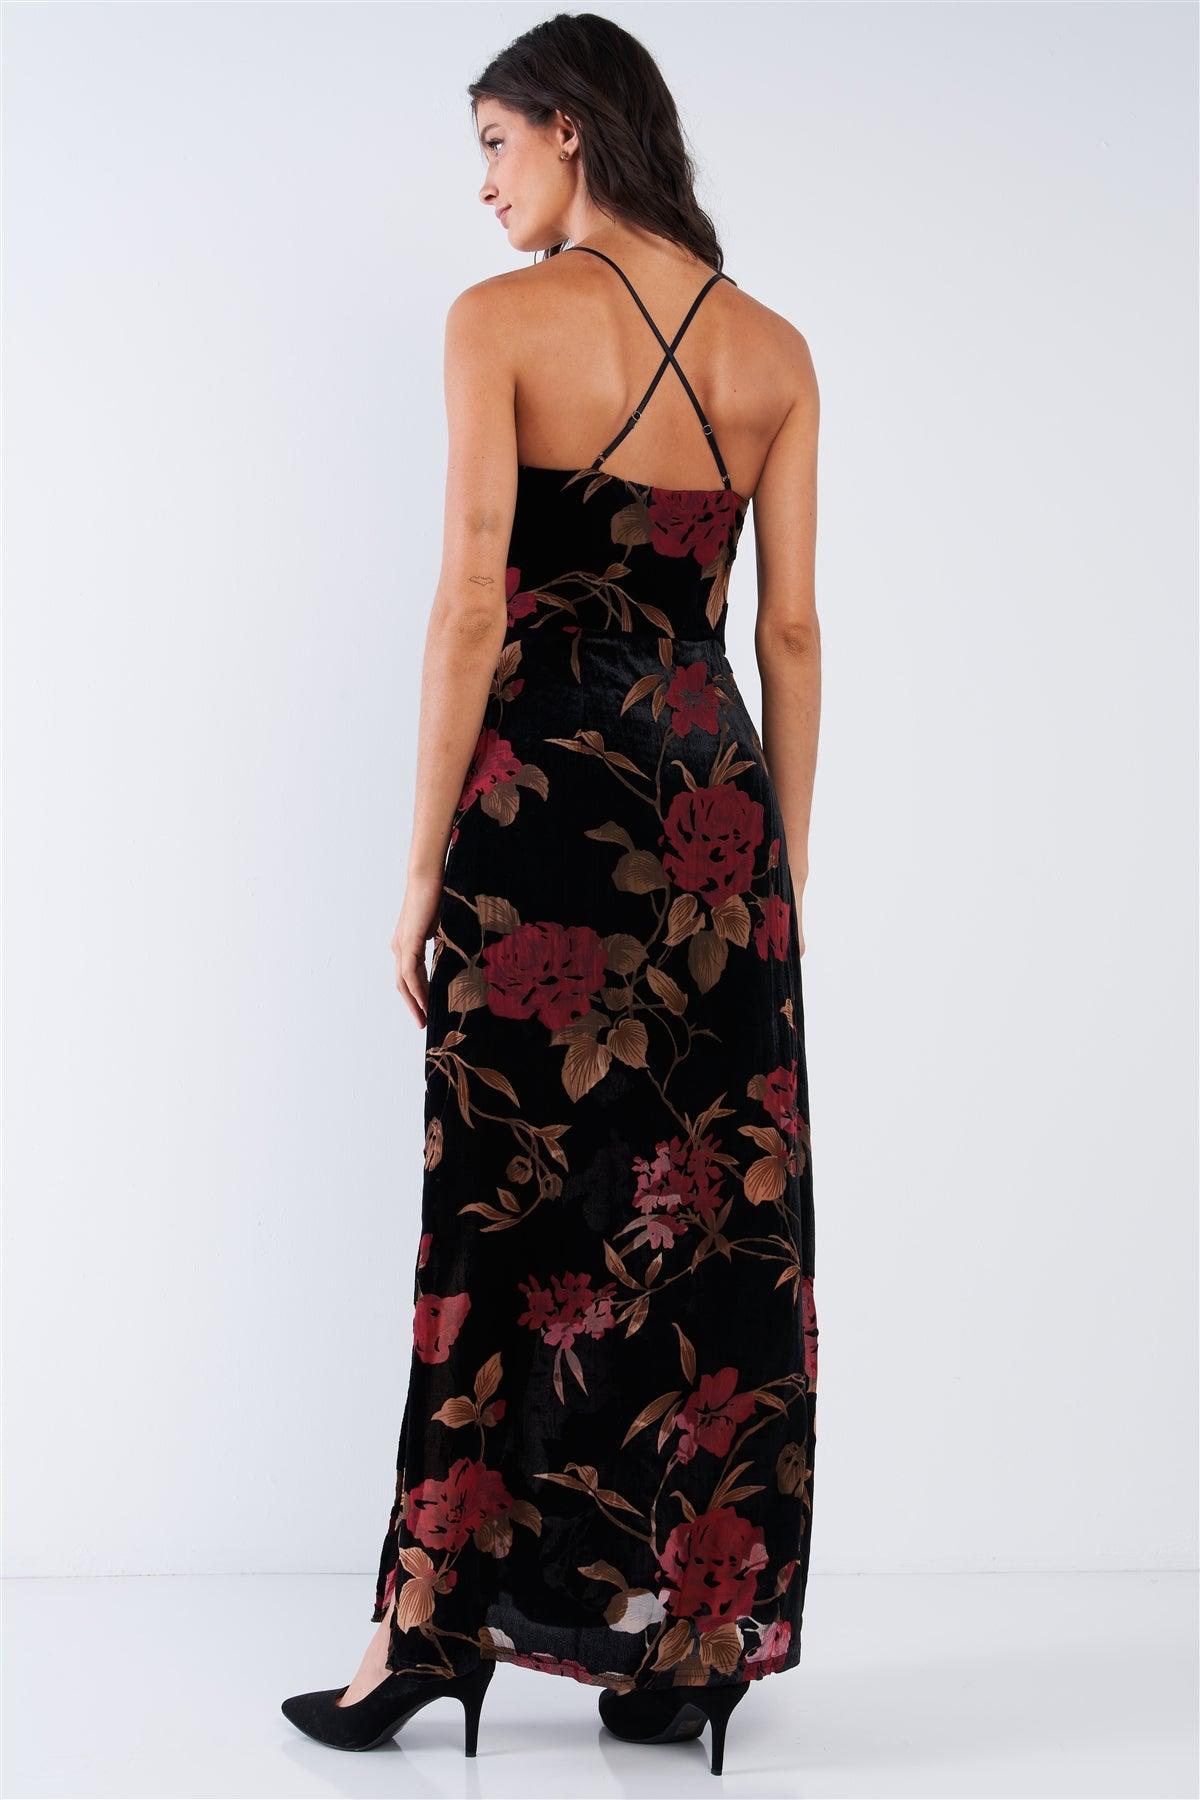 Black Velvet Multi Color Floral Print V-Neck Criss-Cross Back Straps Maxi Dress